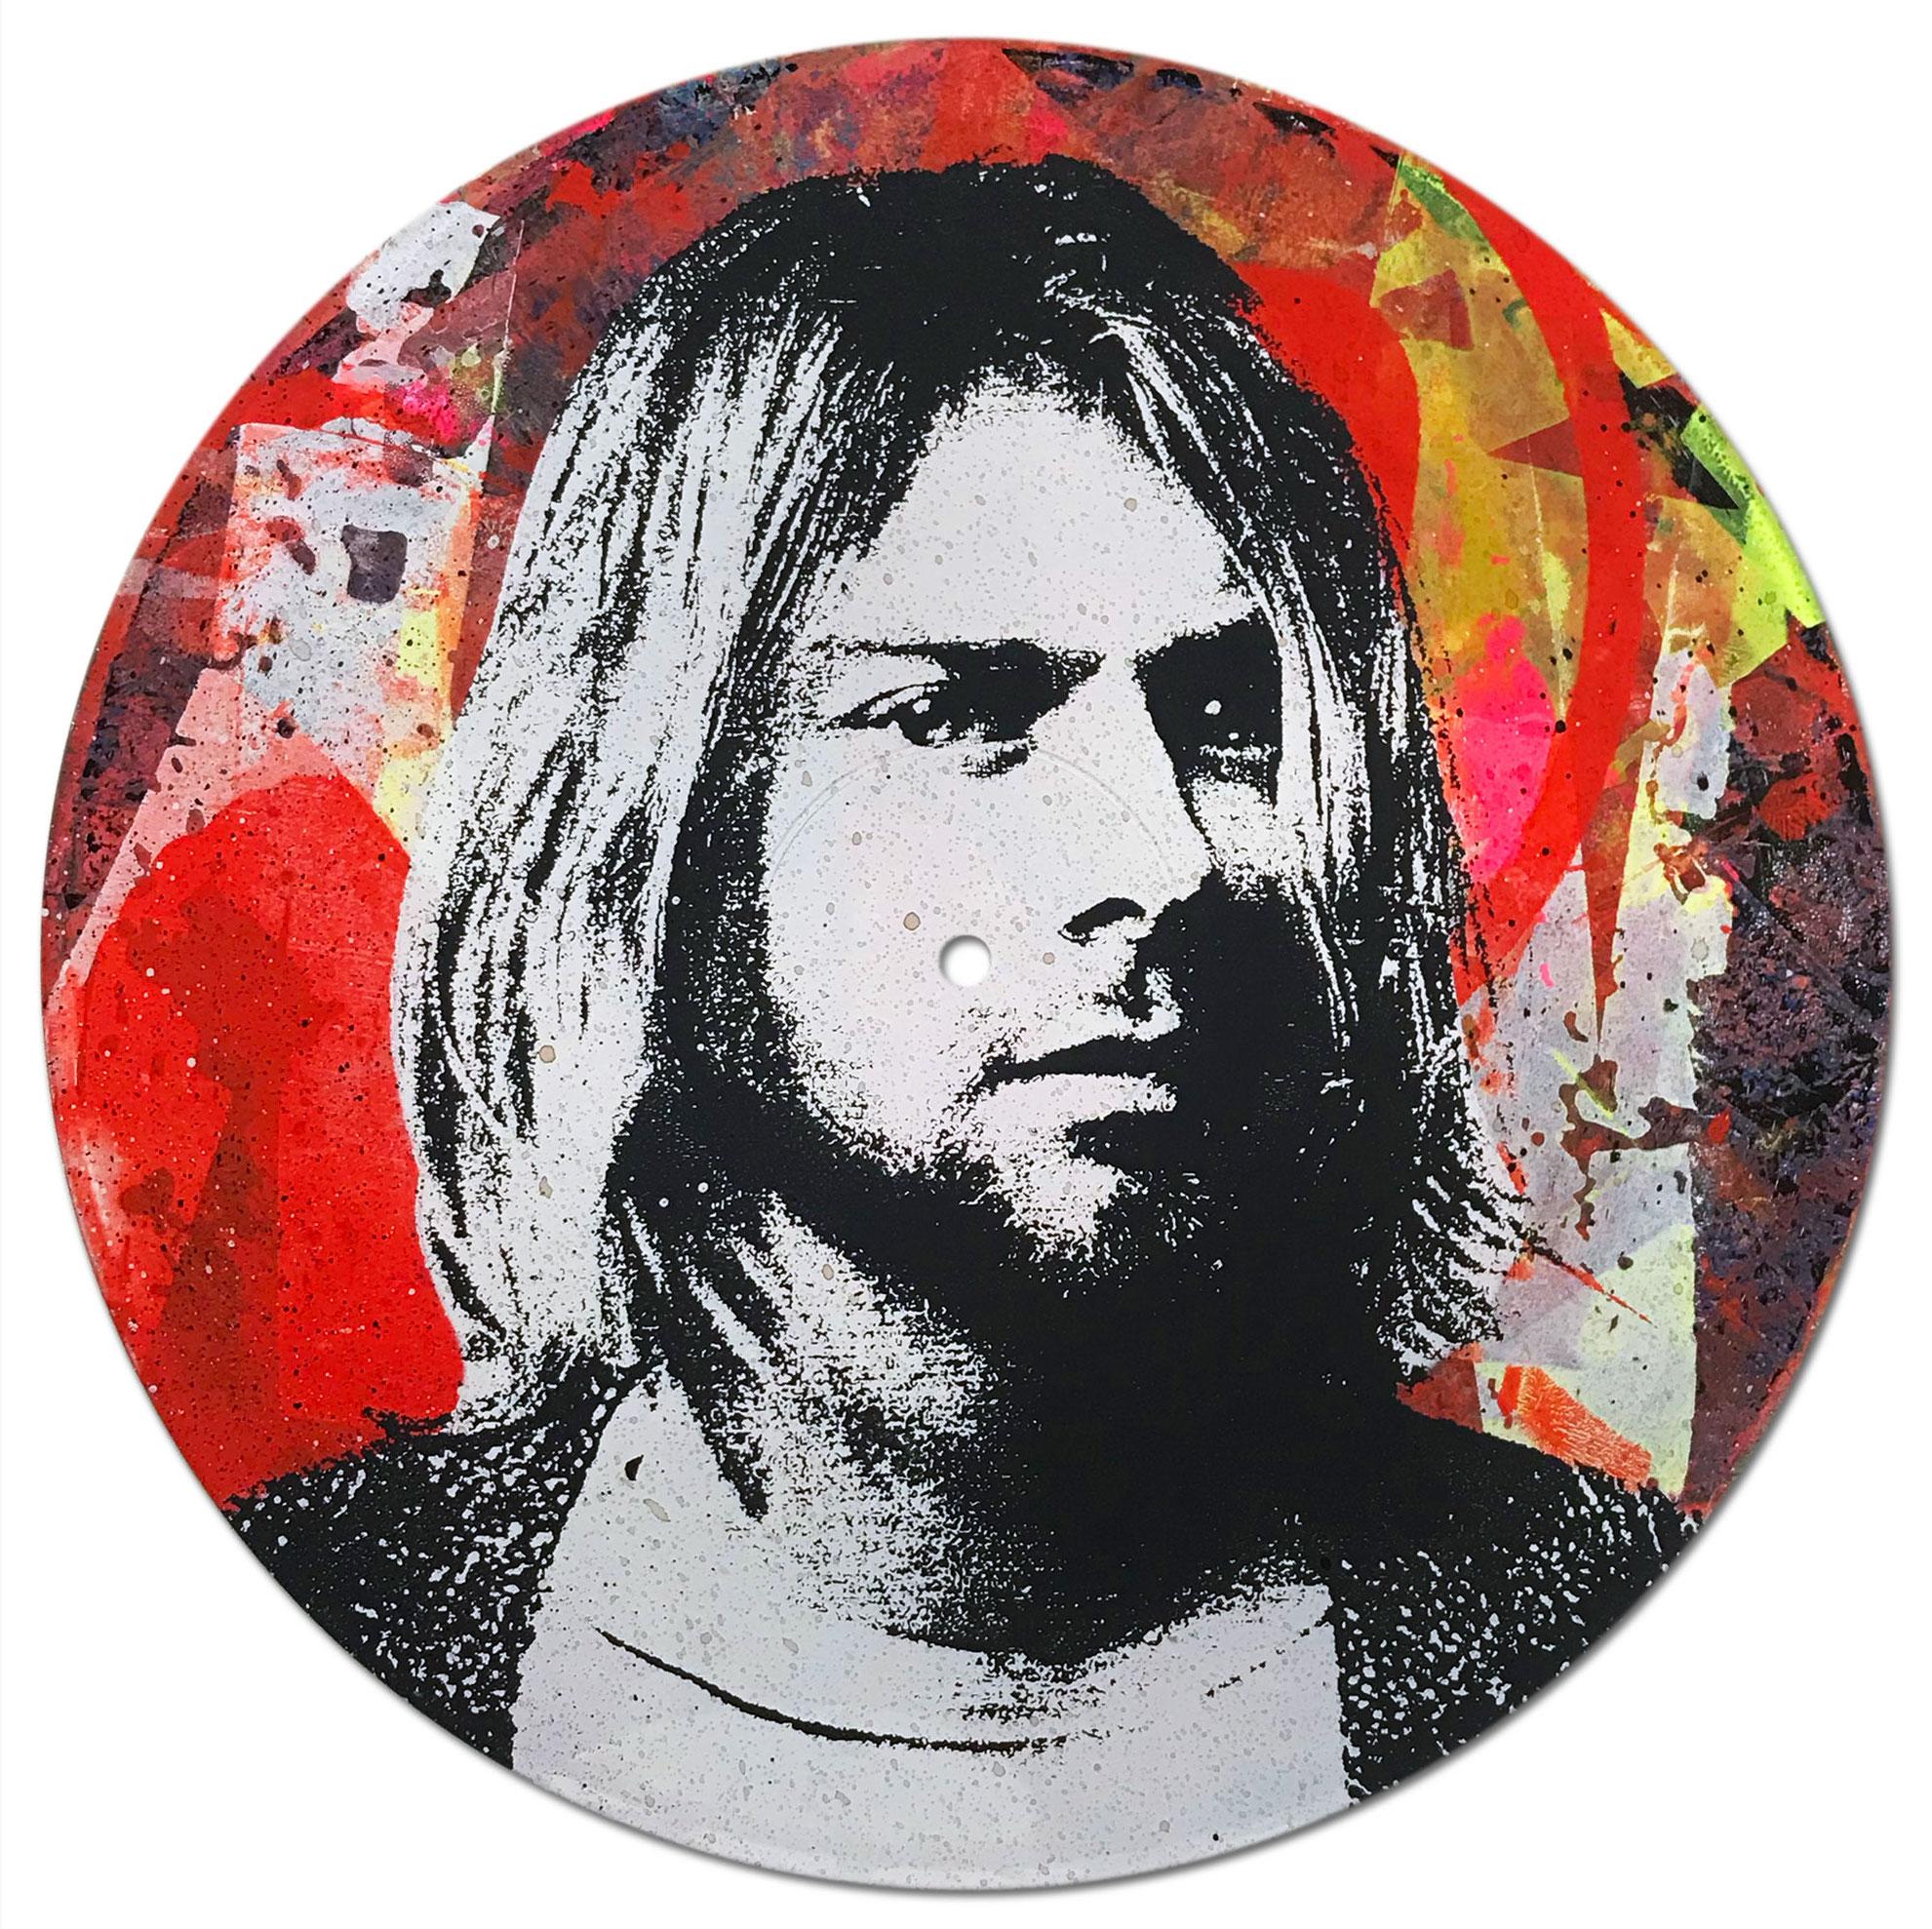 Kurt Cobain Vinyl 1-10, Greg Gossel Pop Art LP Record (Singles & Sets Available) For Sale 4